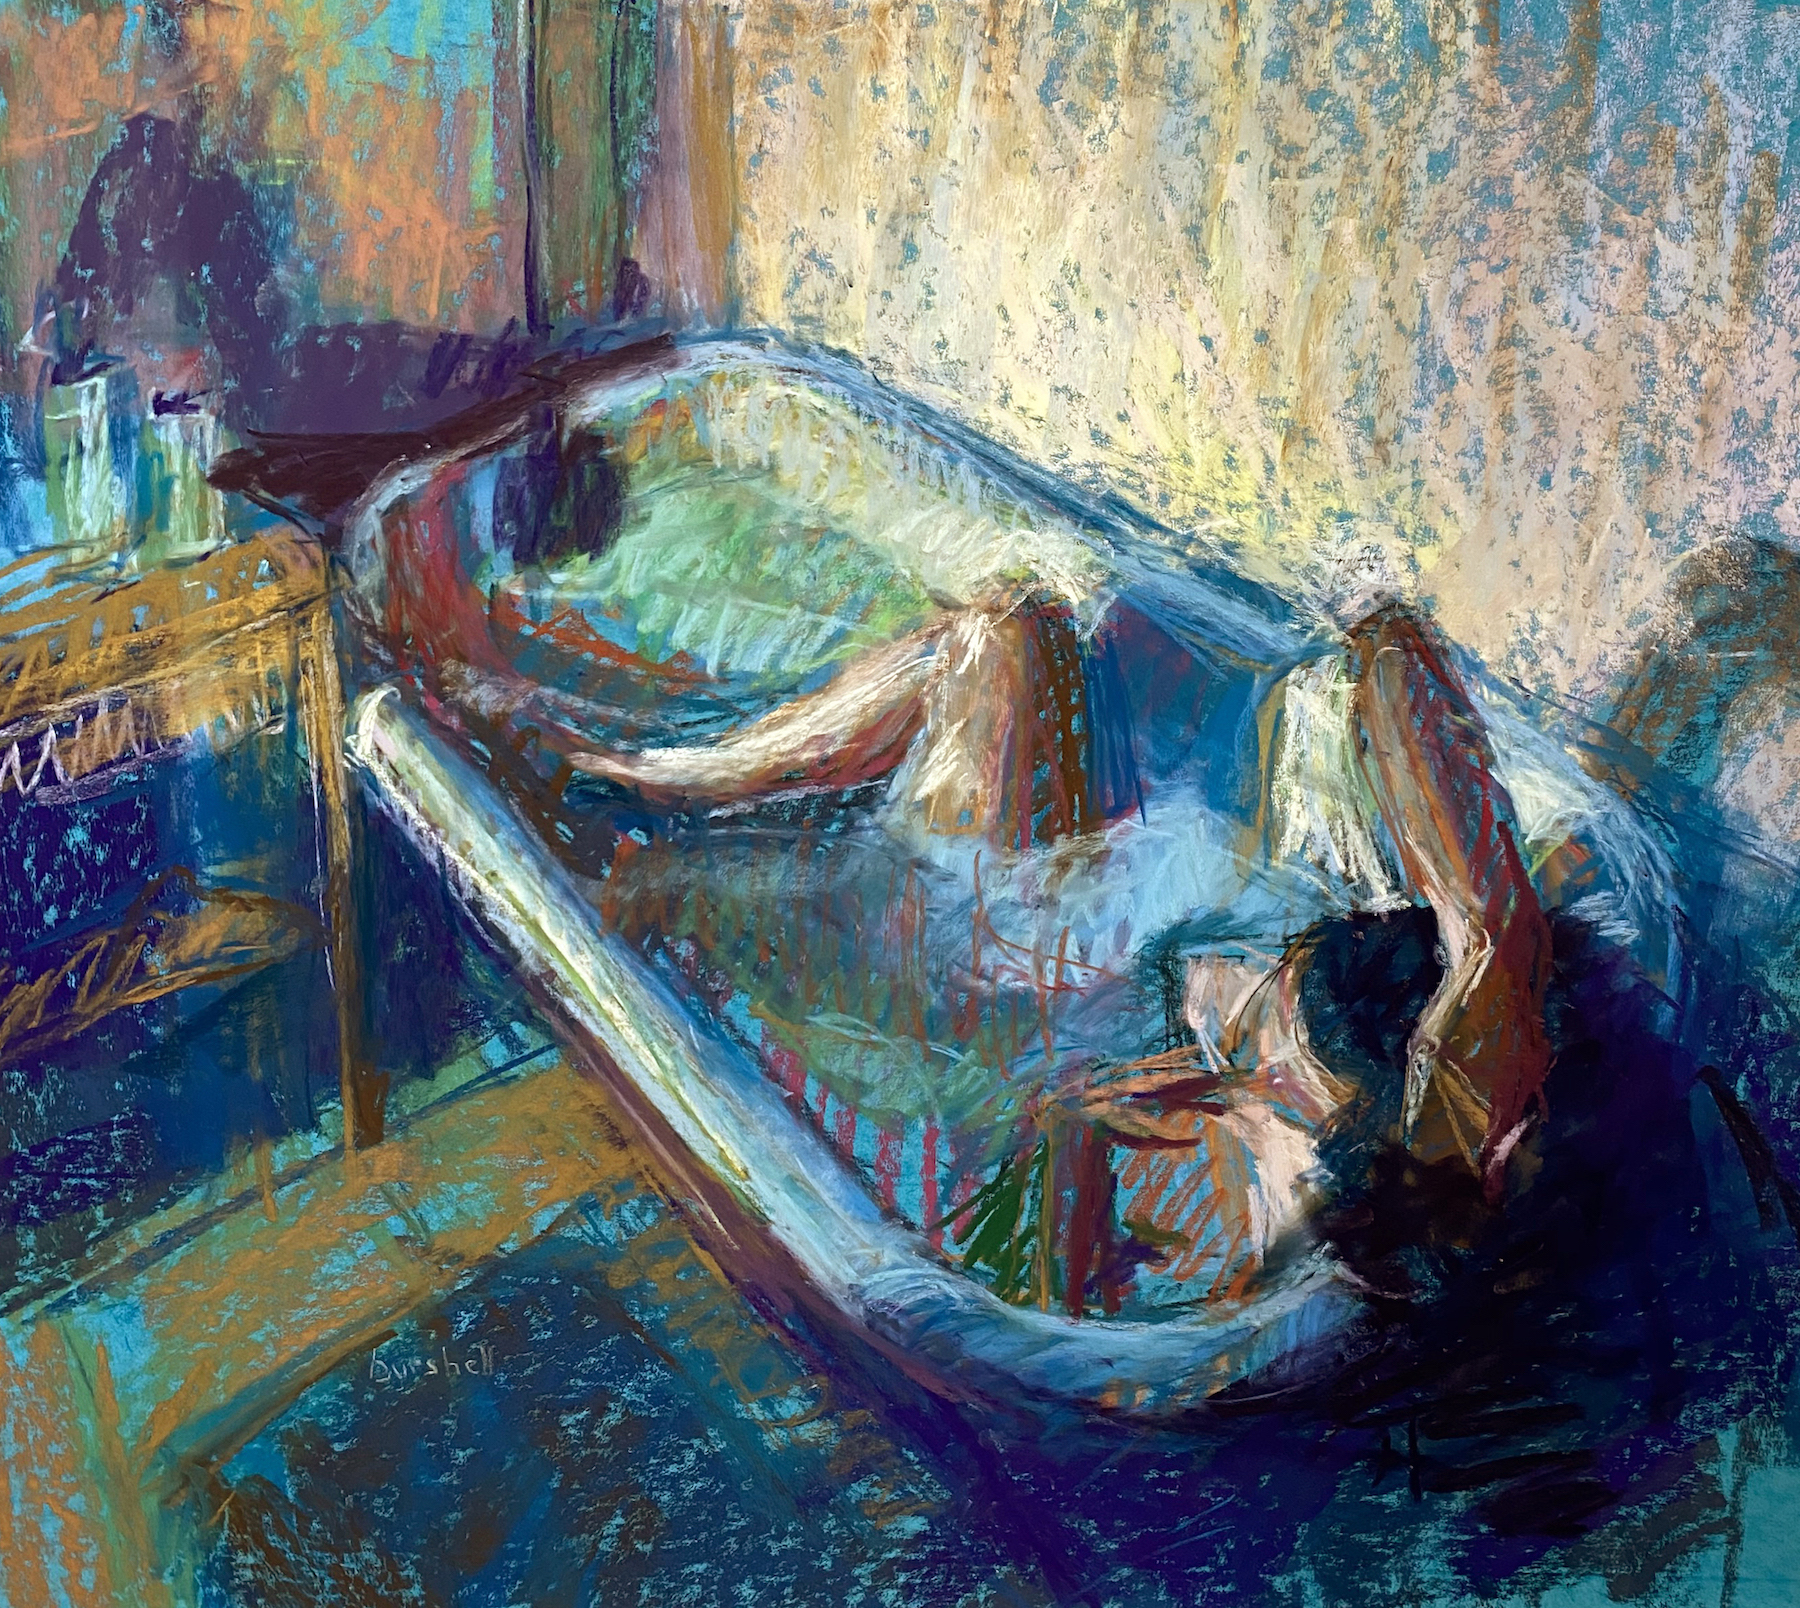 Sandra Burshell, "The Tub," pastel on sanded pastel paper, 18 x 20 in.